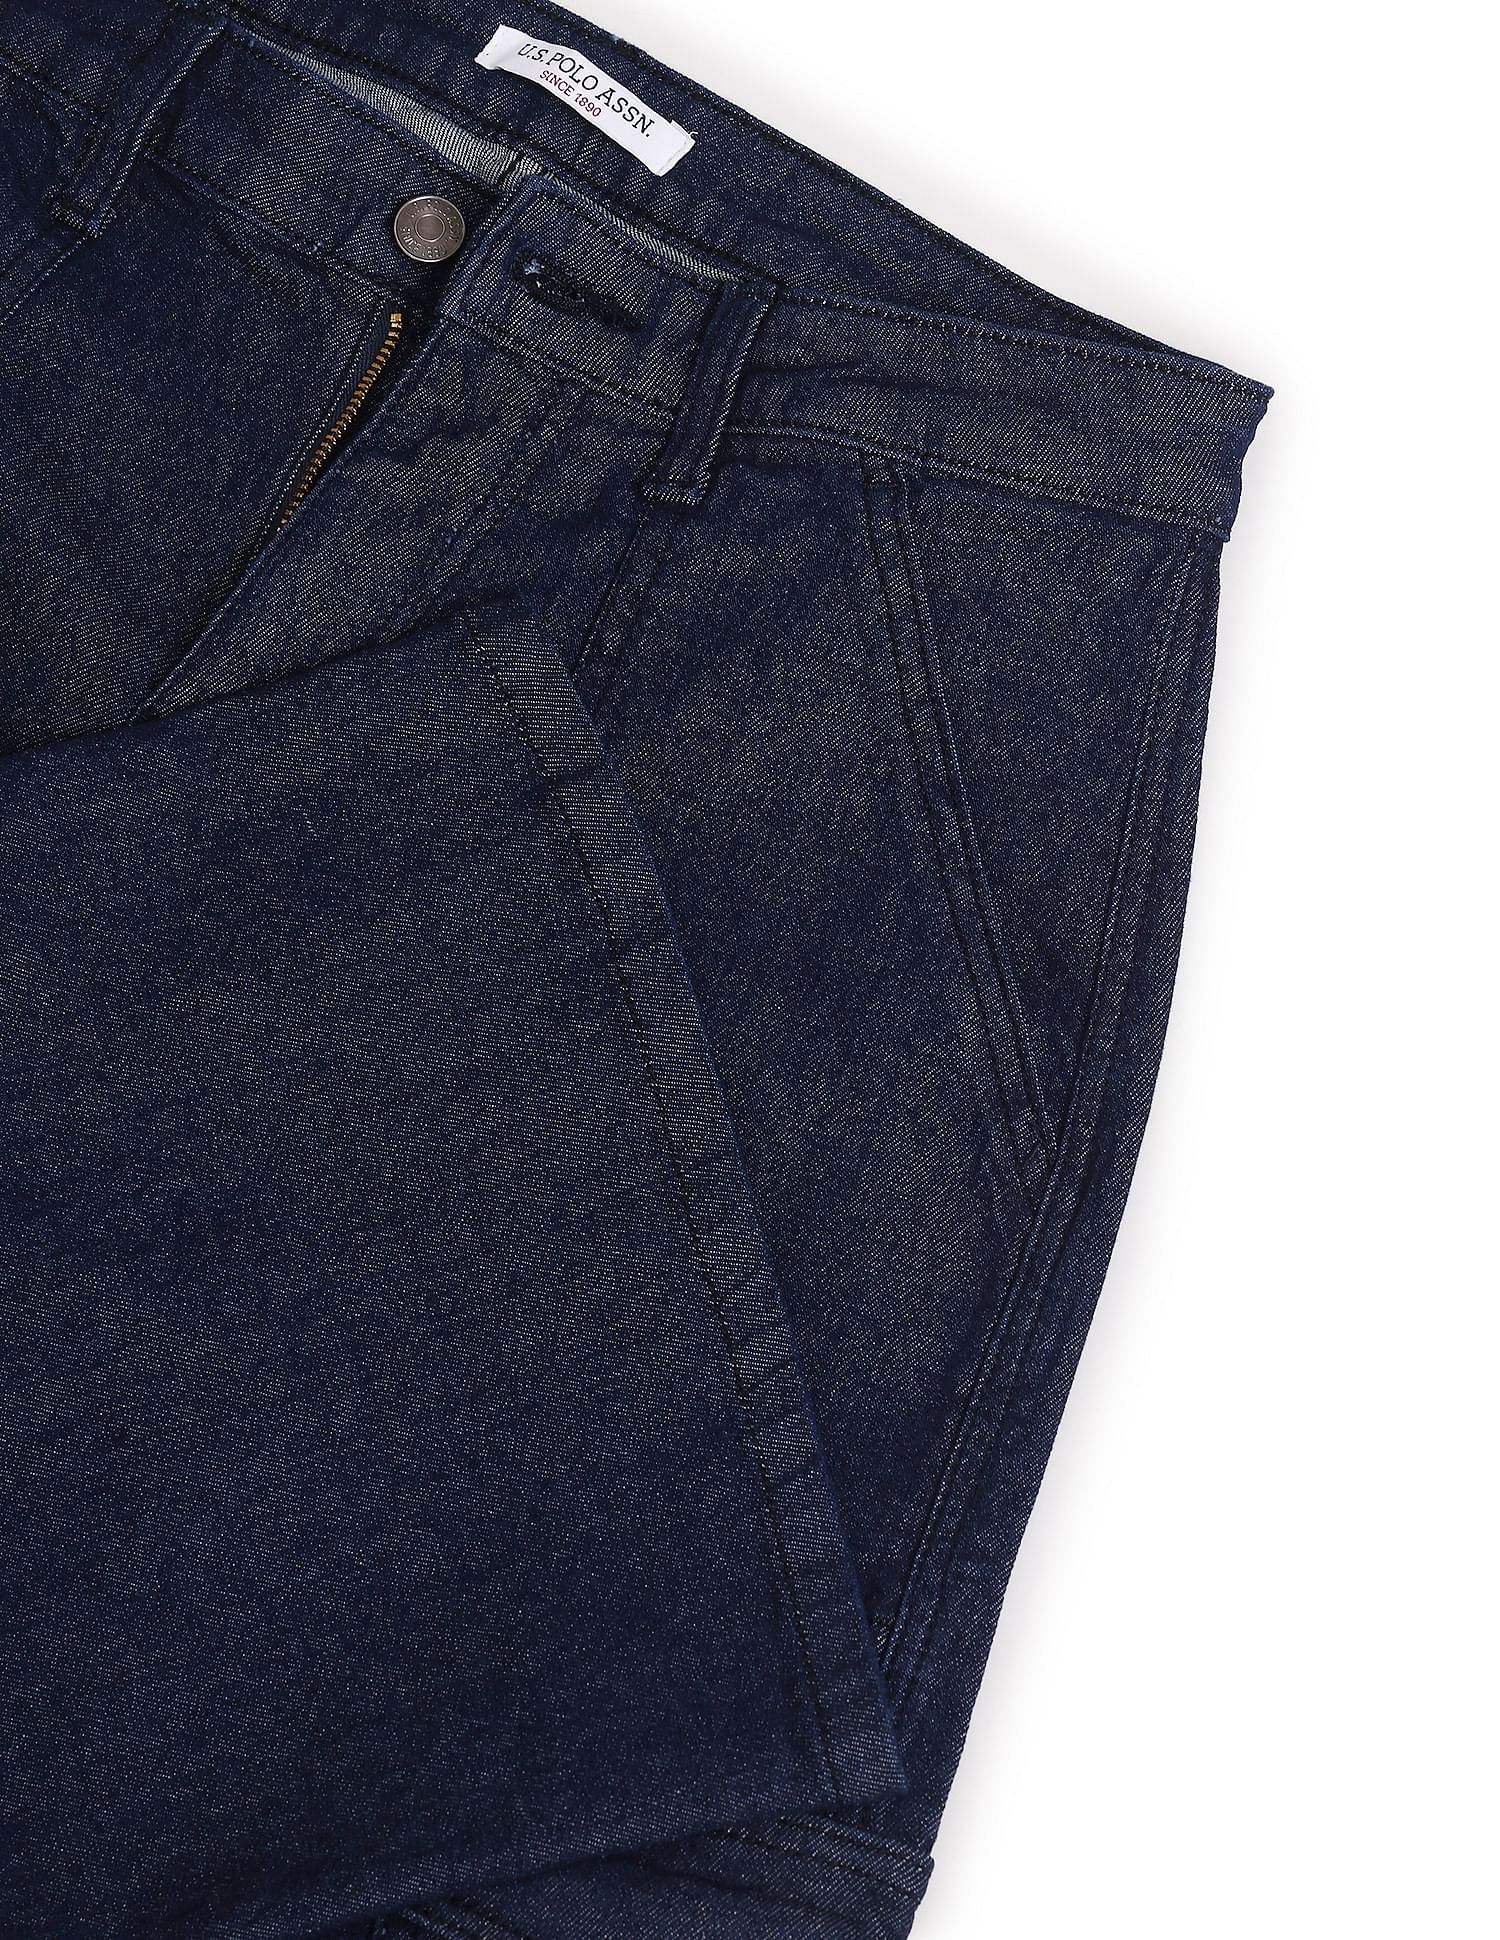 Womens Dark Blue Loose-Fit Cargo Jeans